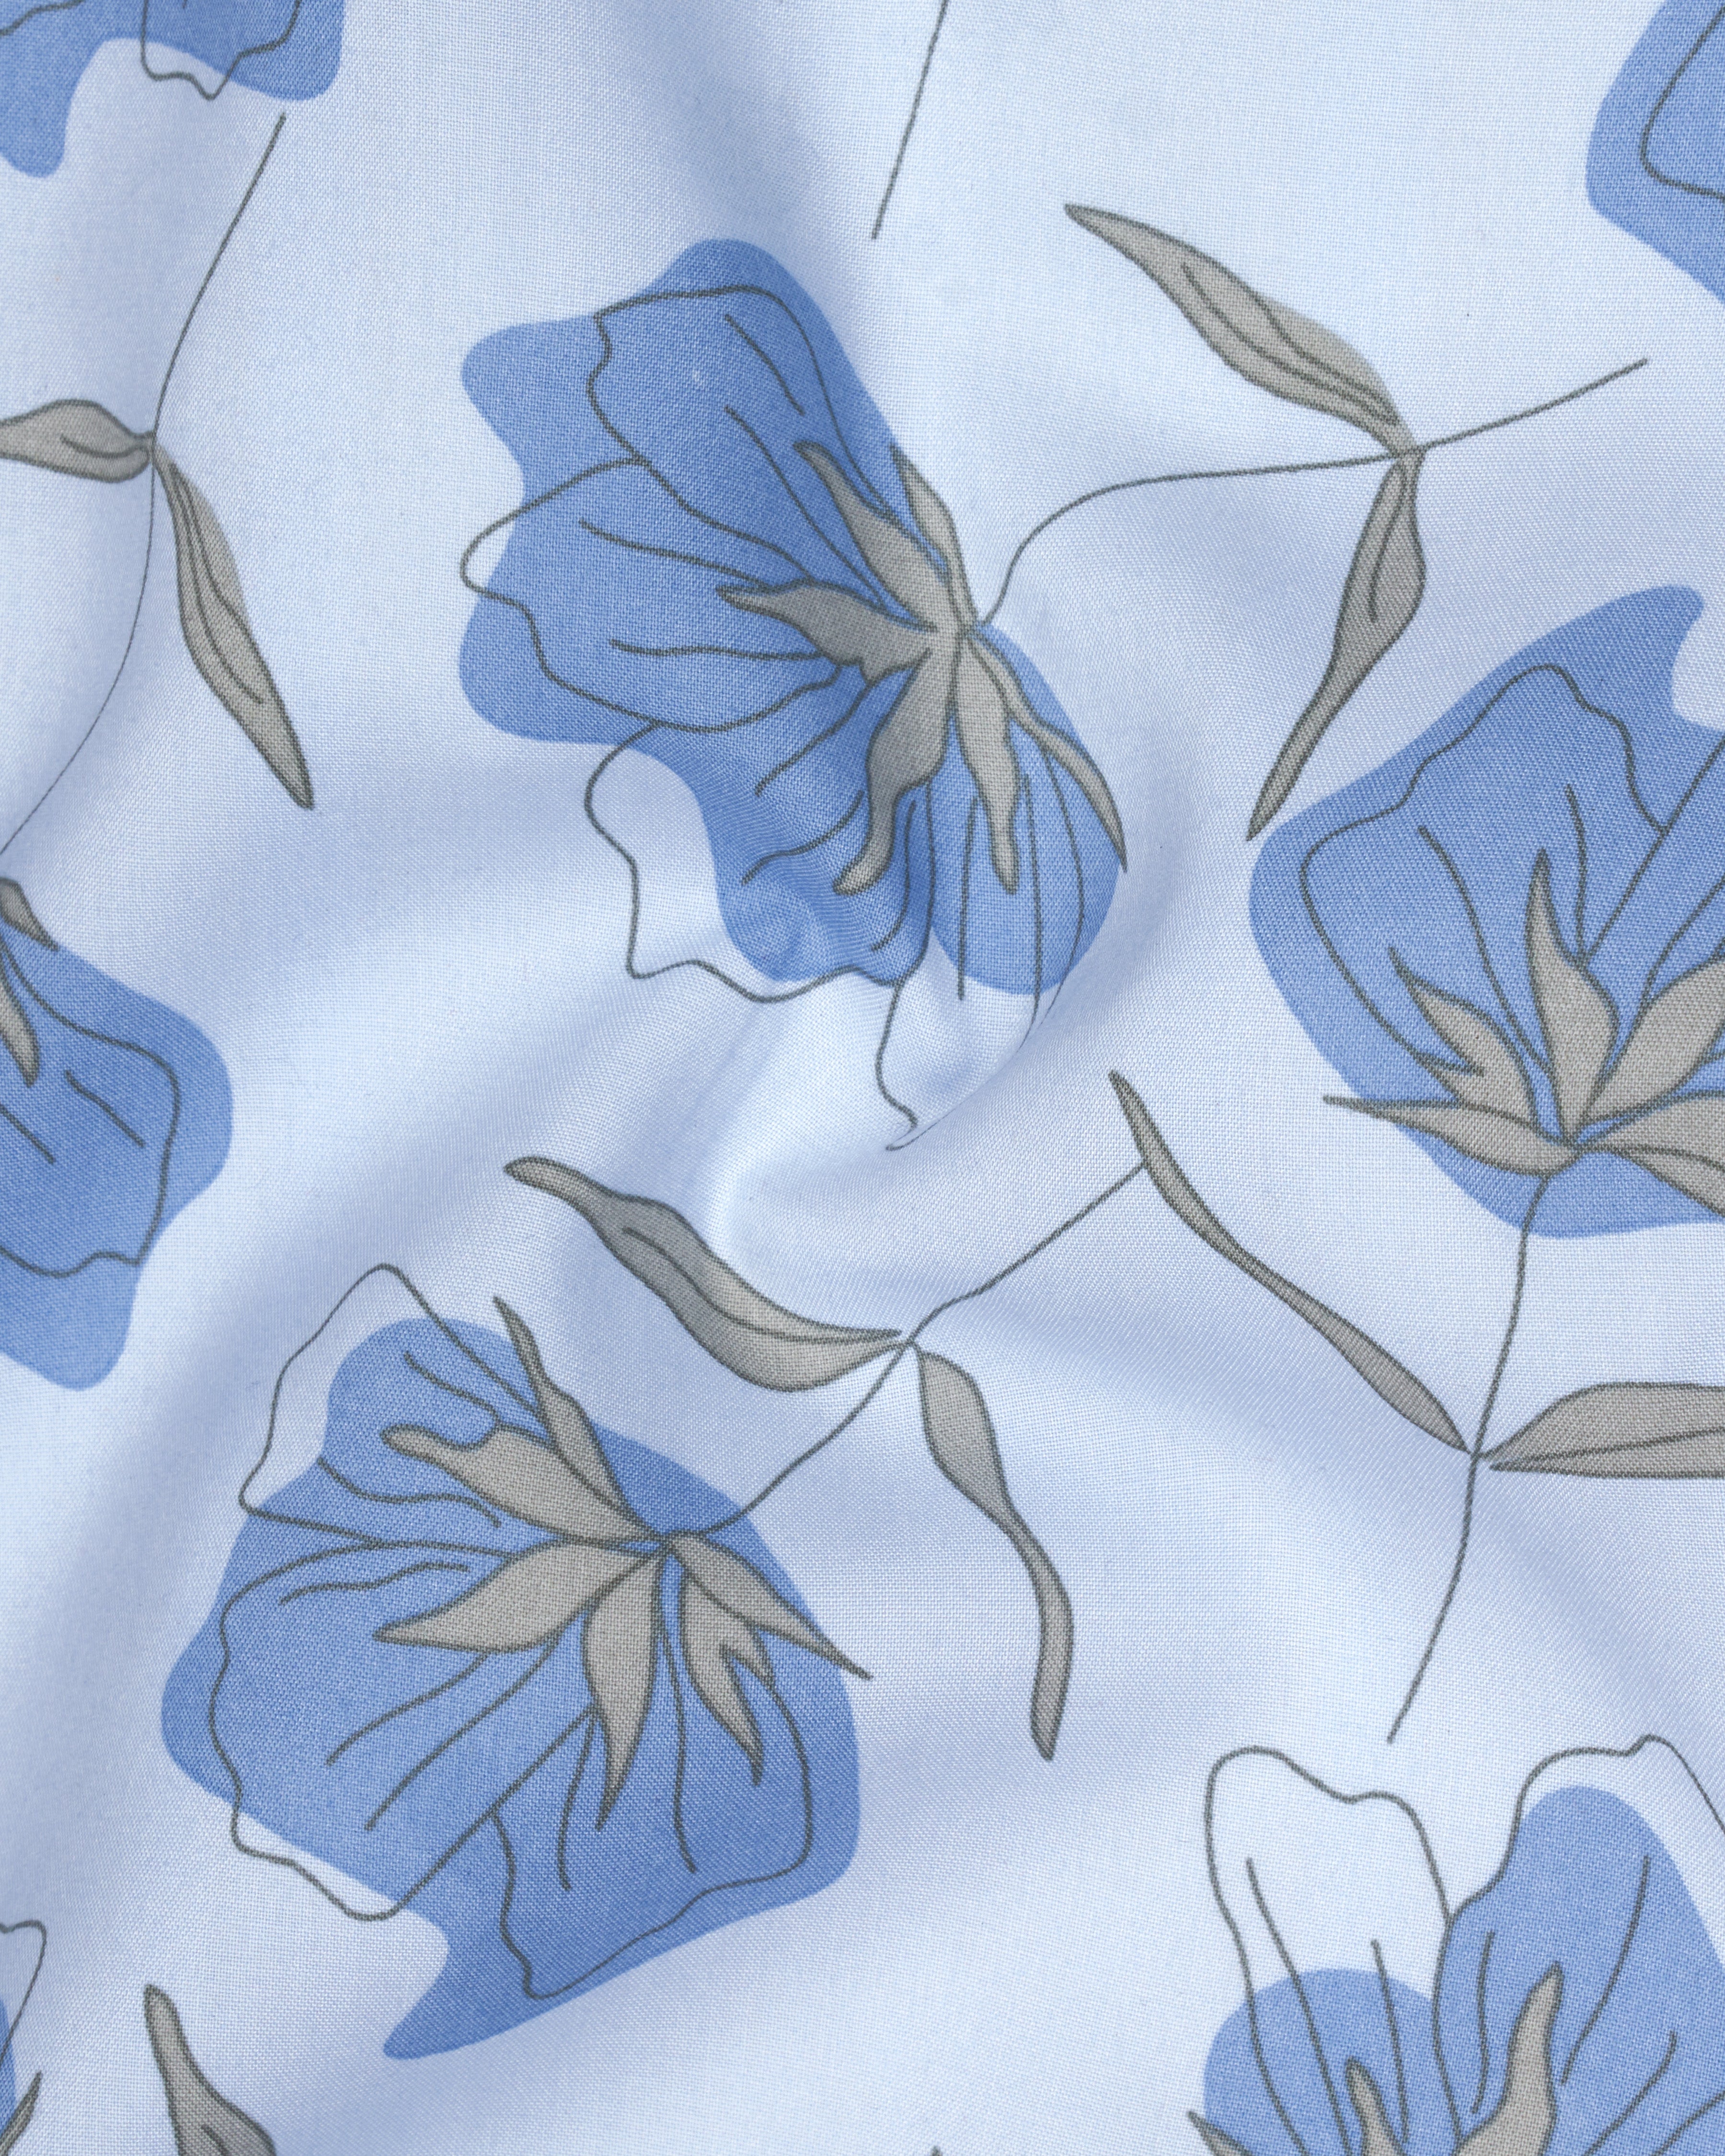 Tropical Blue Floral Printed Premium Cotton Shorts SR202-28, SR202-30, SR202-32, SR202-34, SR202-36, SR202-38, SR202-40, SR202-42, SR202-44